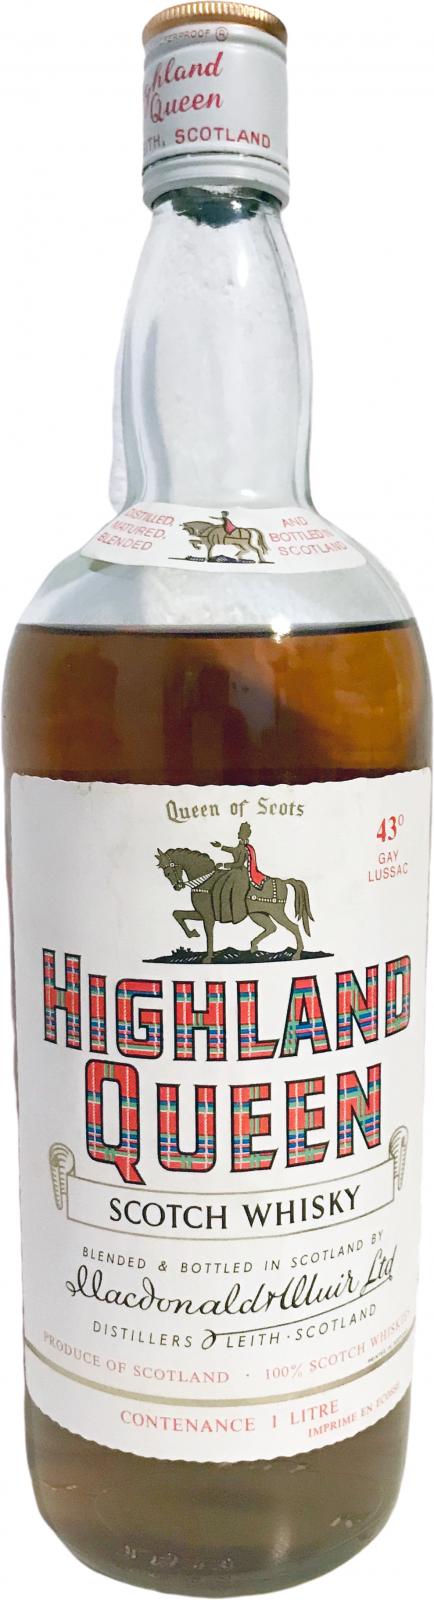 Highland Queen Scotch Whisky Les Fils de L de Coninck 43% 1000ml